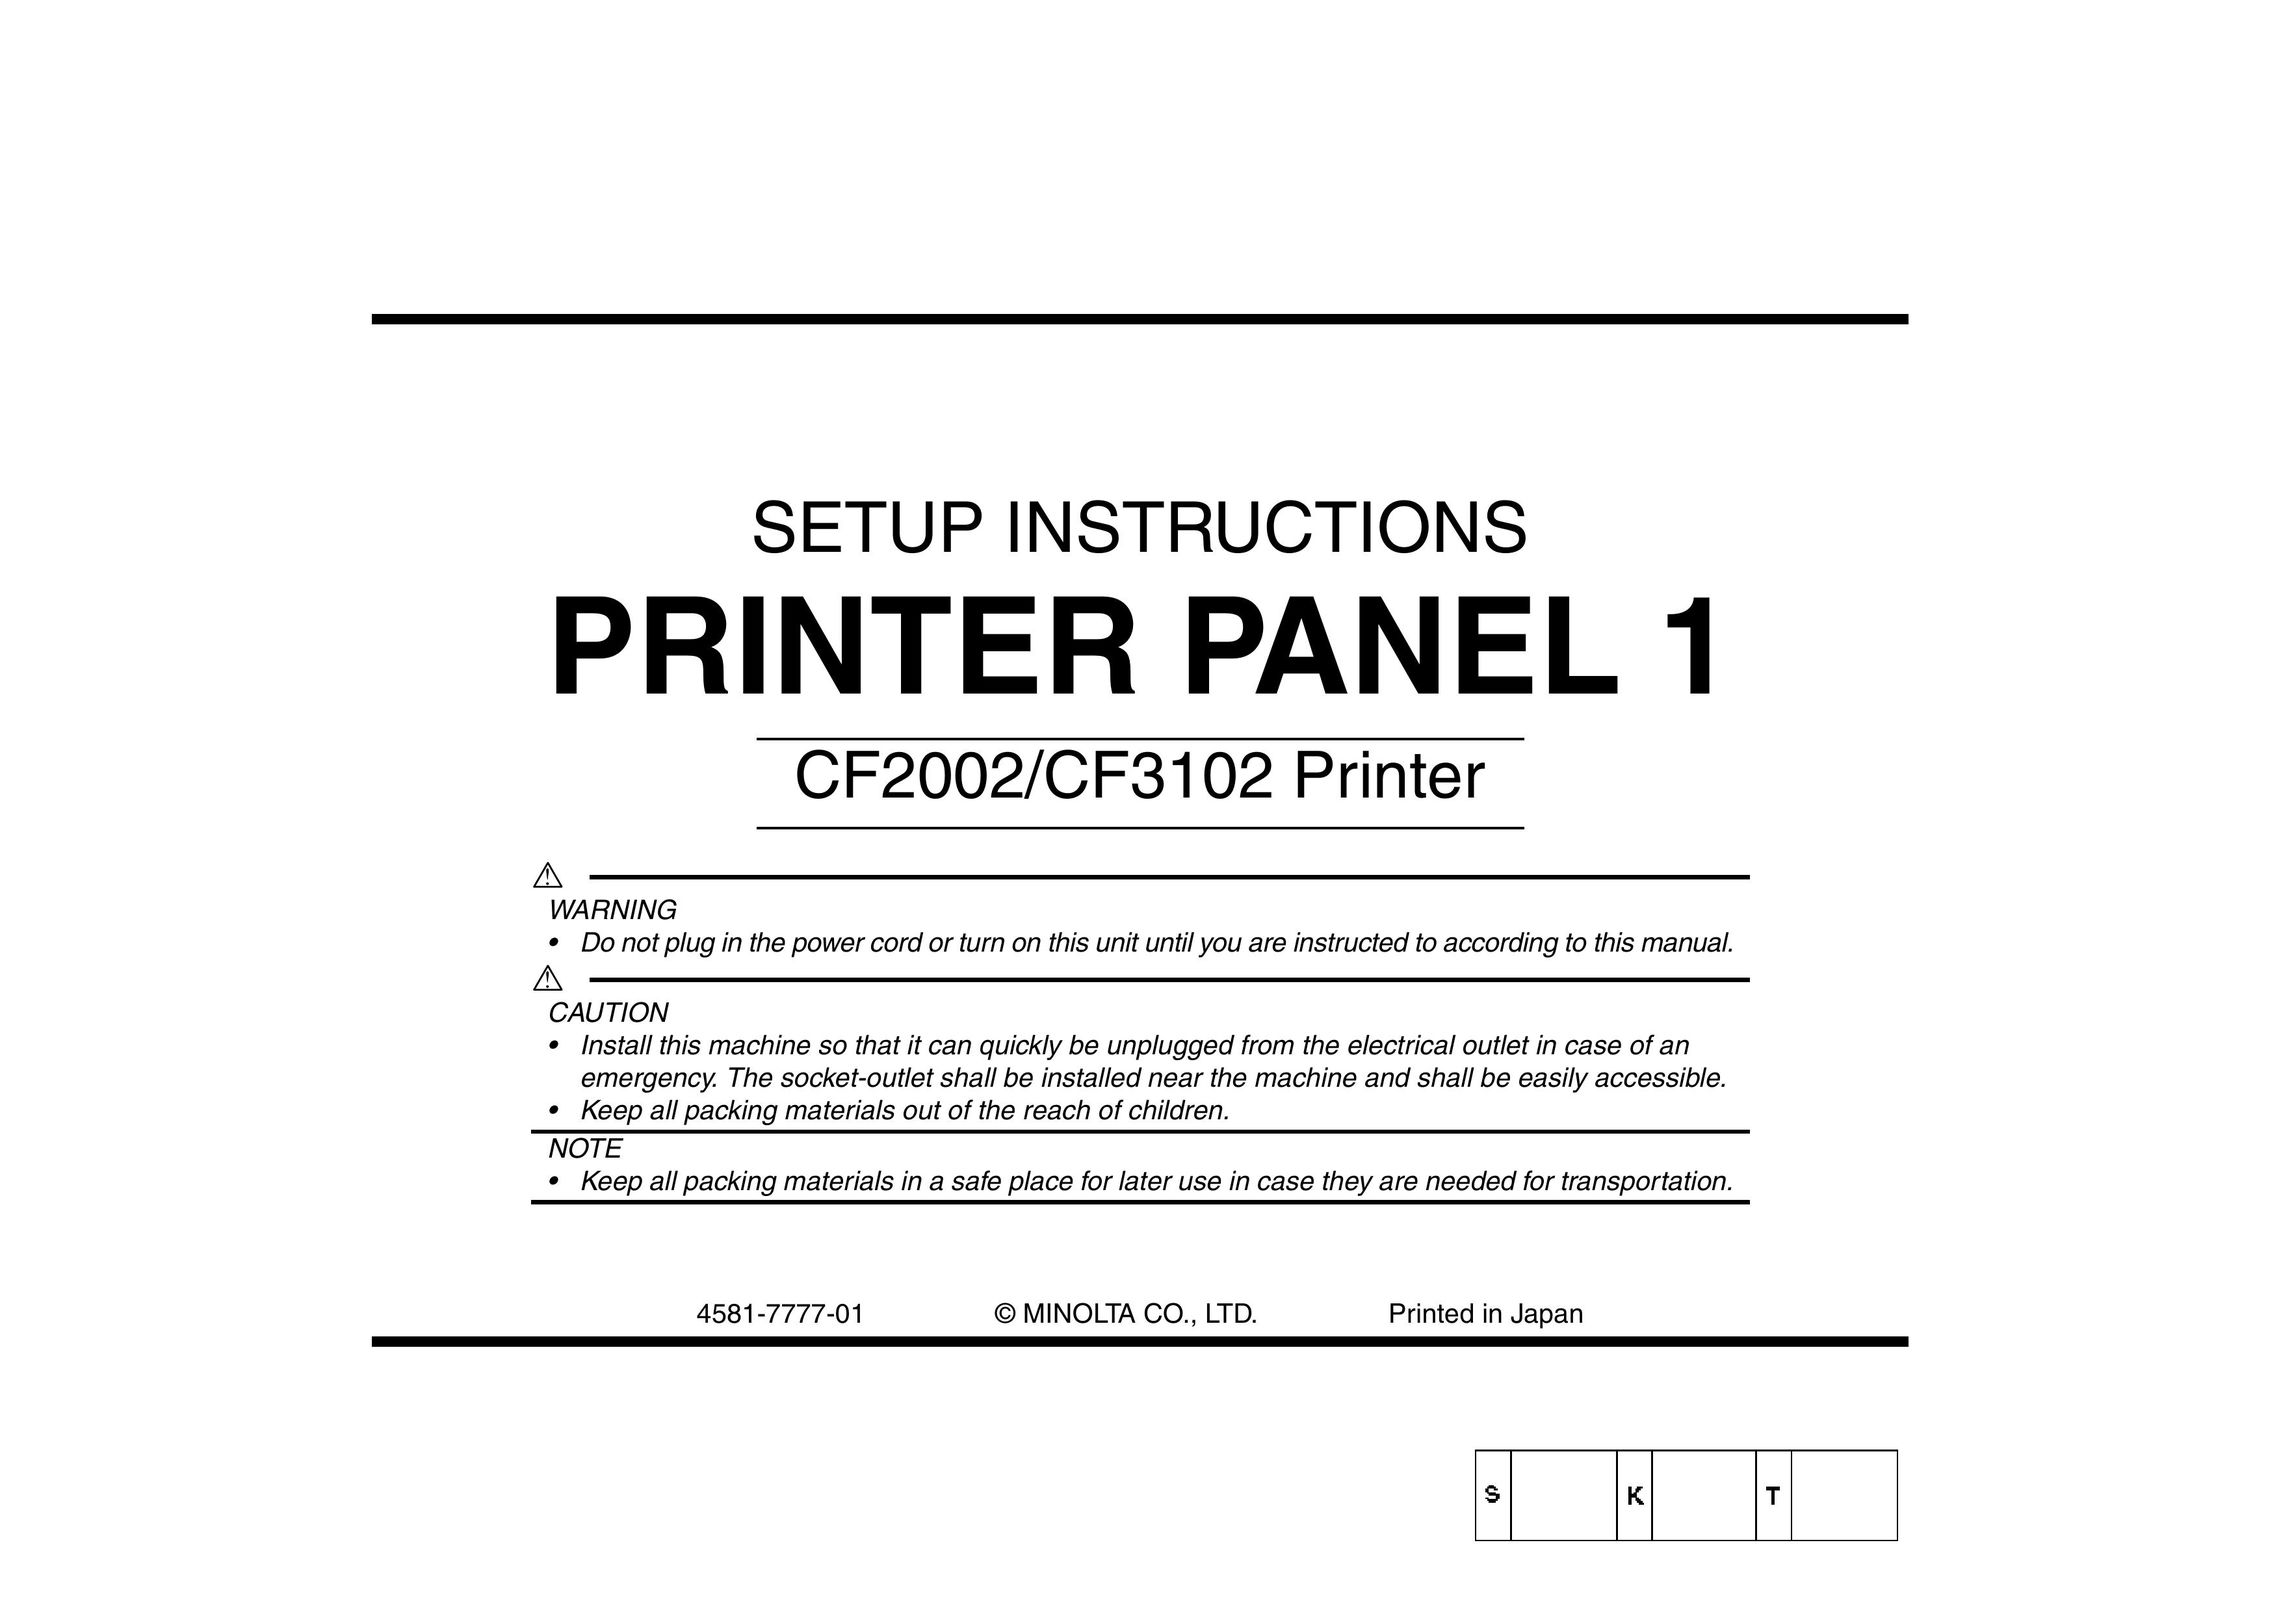 Minolta CF2002 All in One Printer User Manual